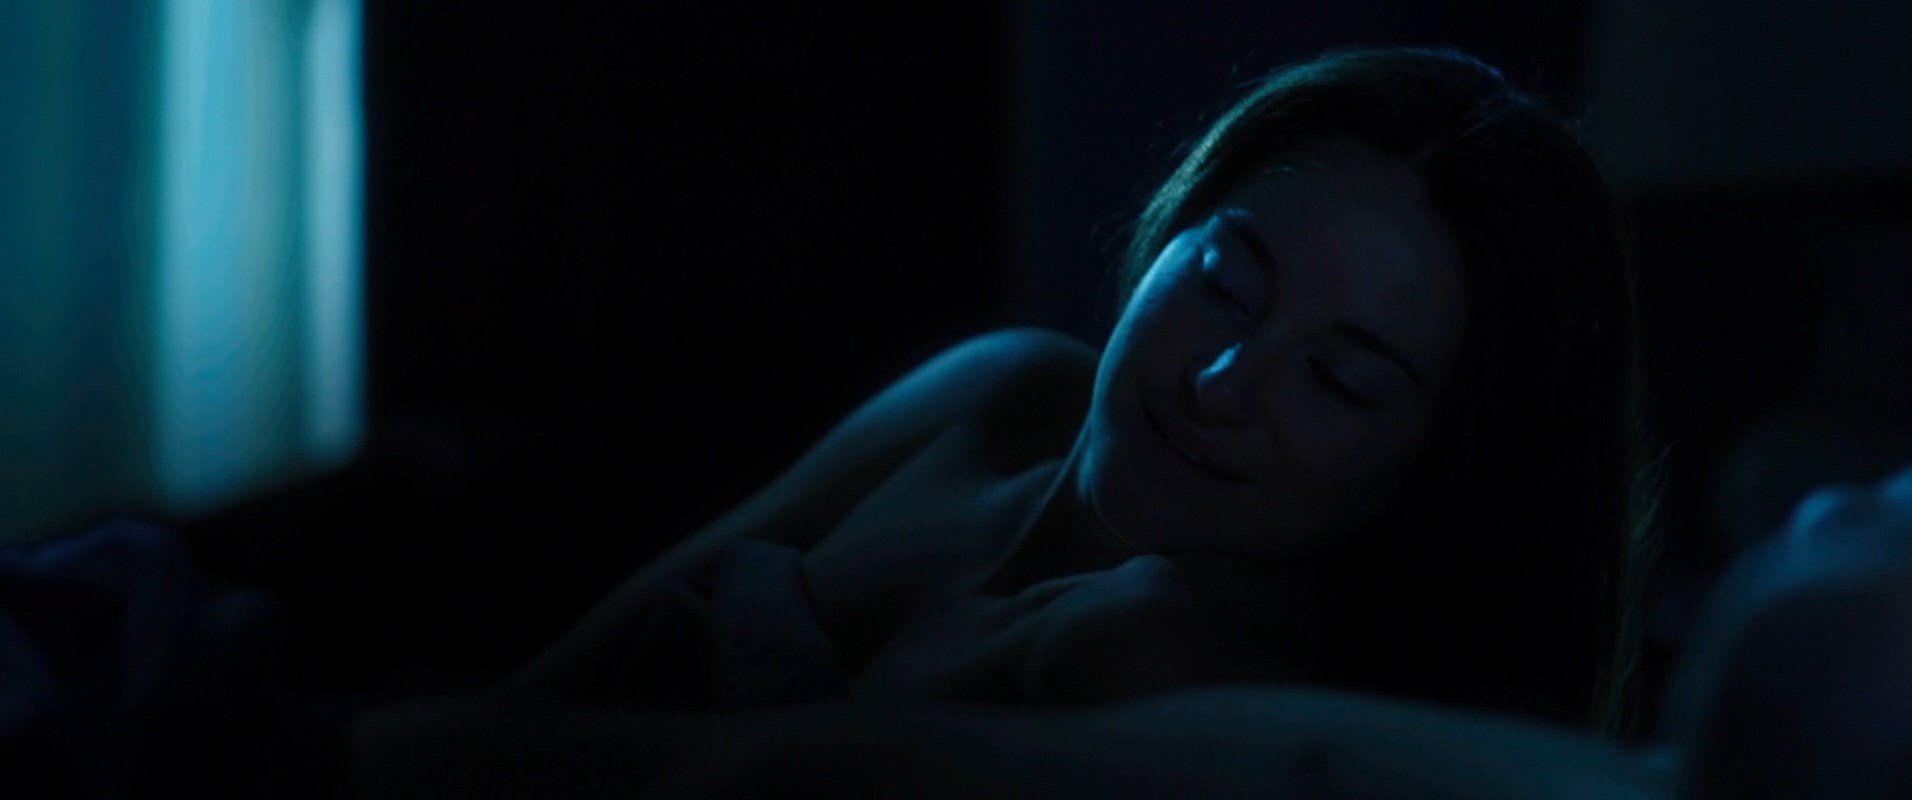 Shailene woodley nude pics